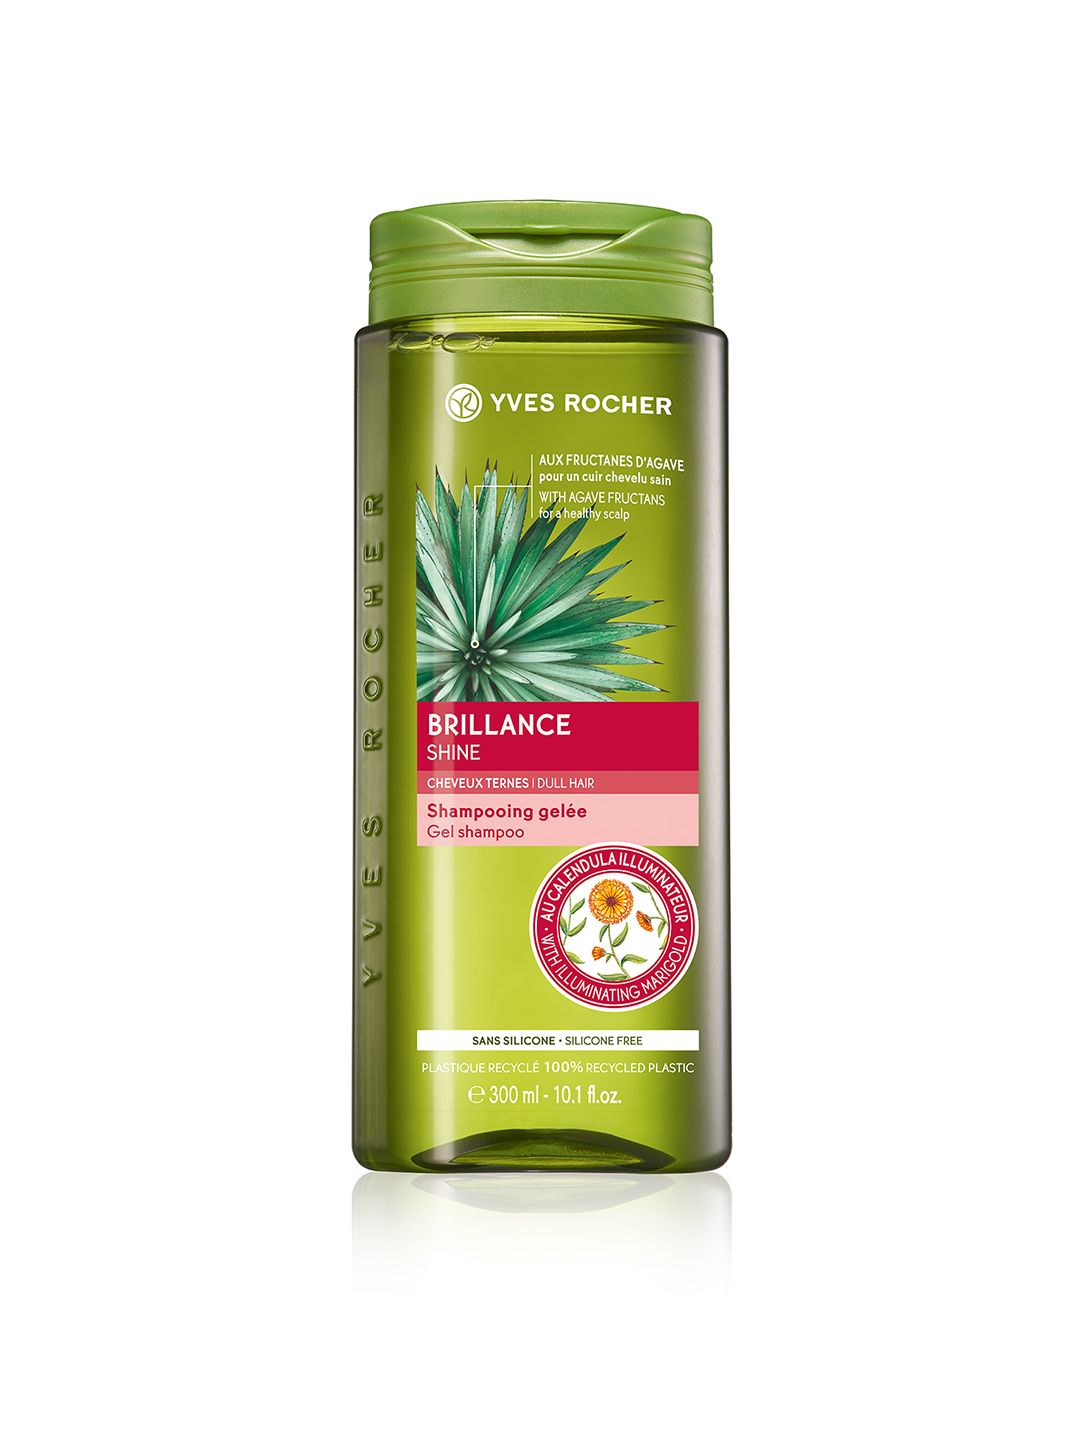 YVES ROCHER Unisex Shine Gel Shampoo 300 ml Price in India